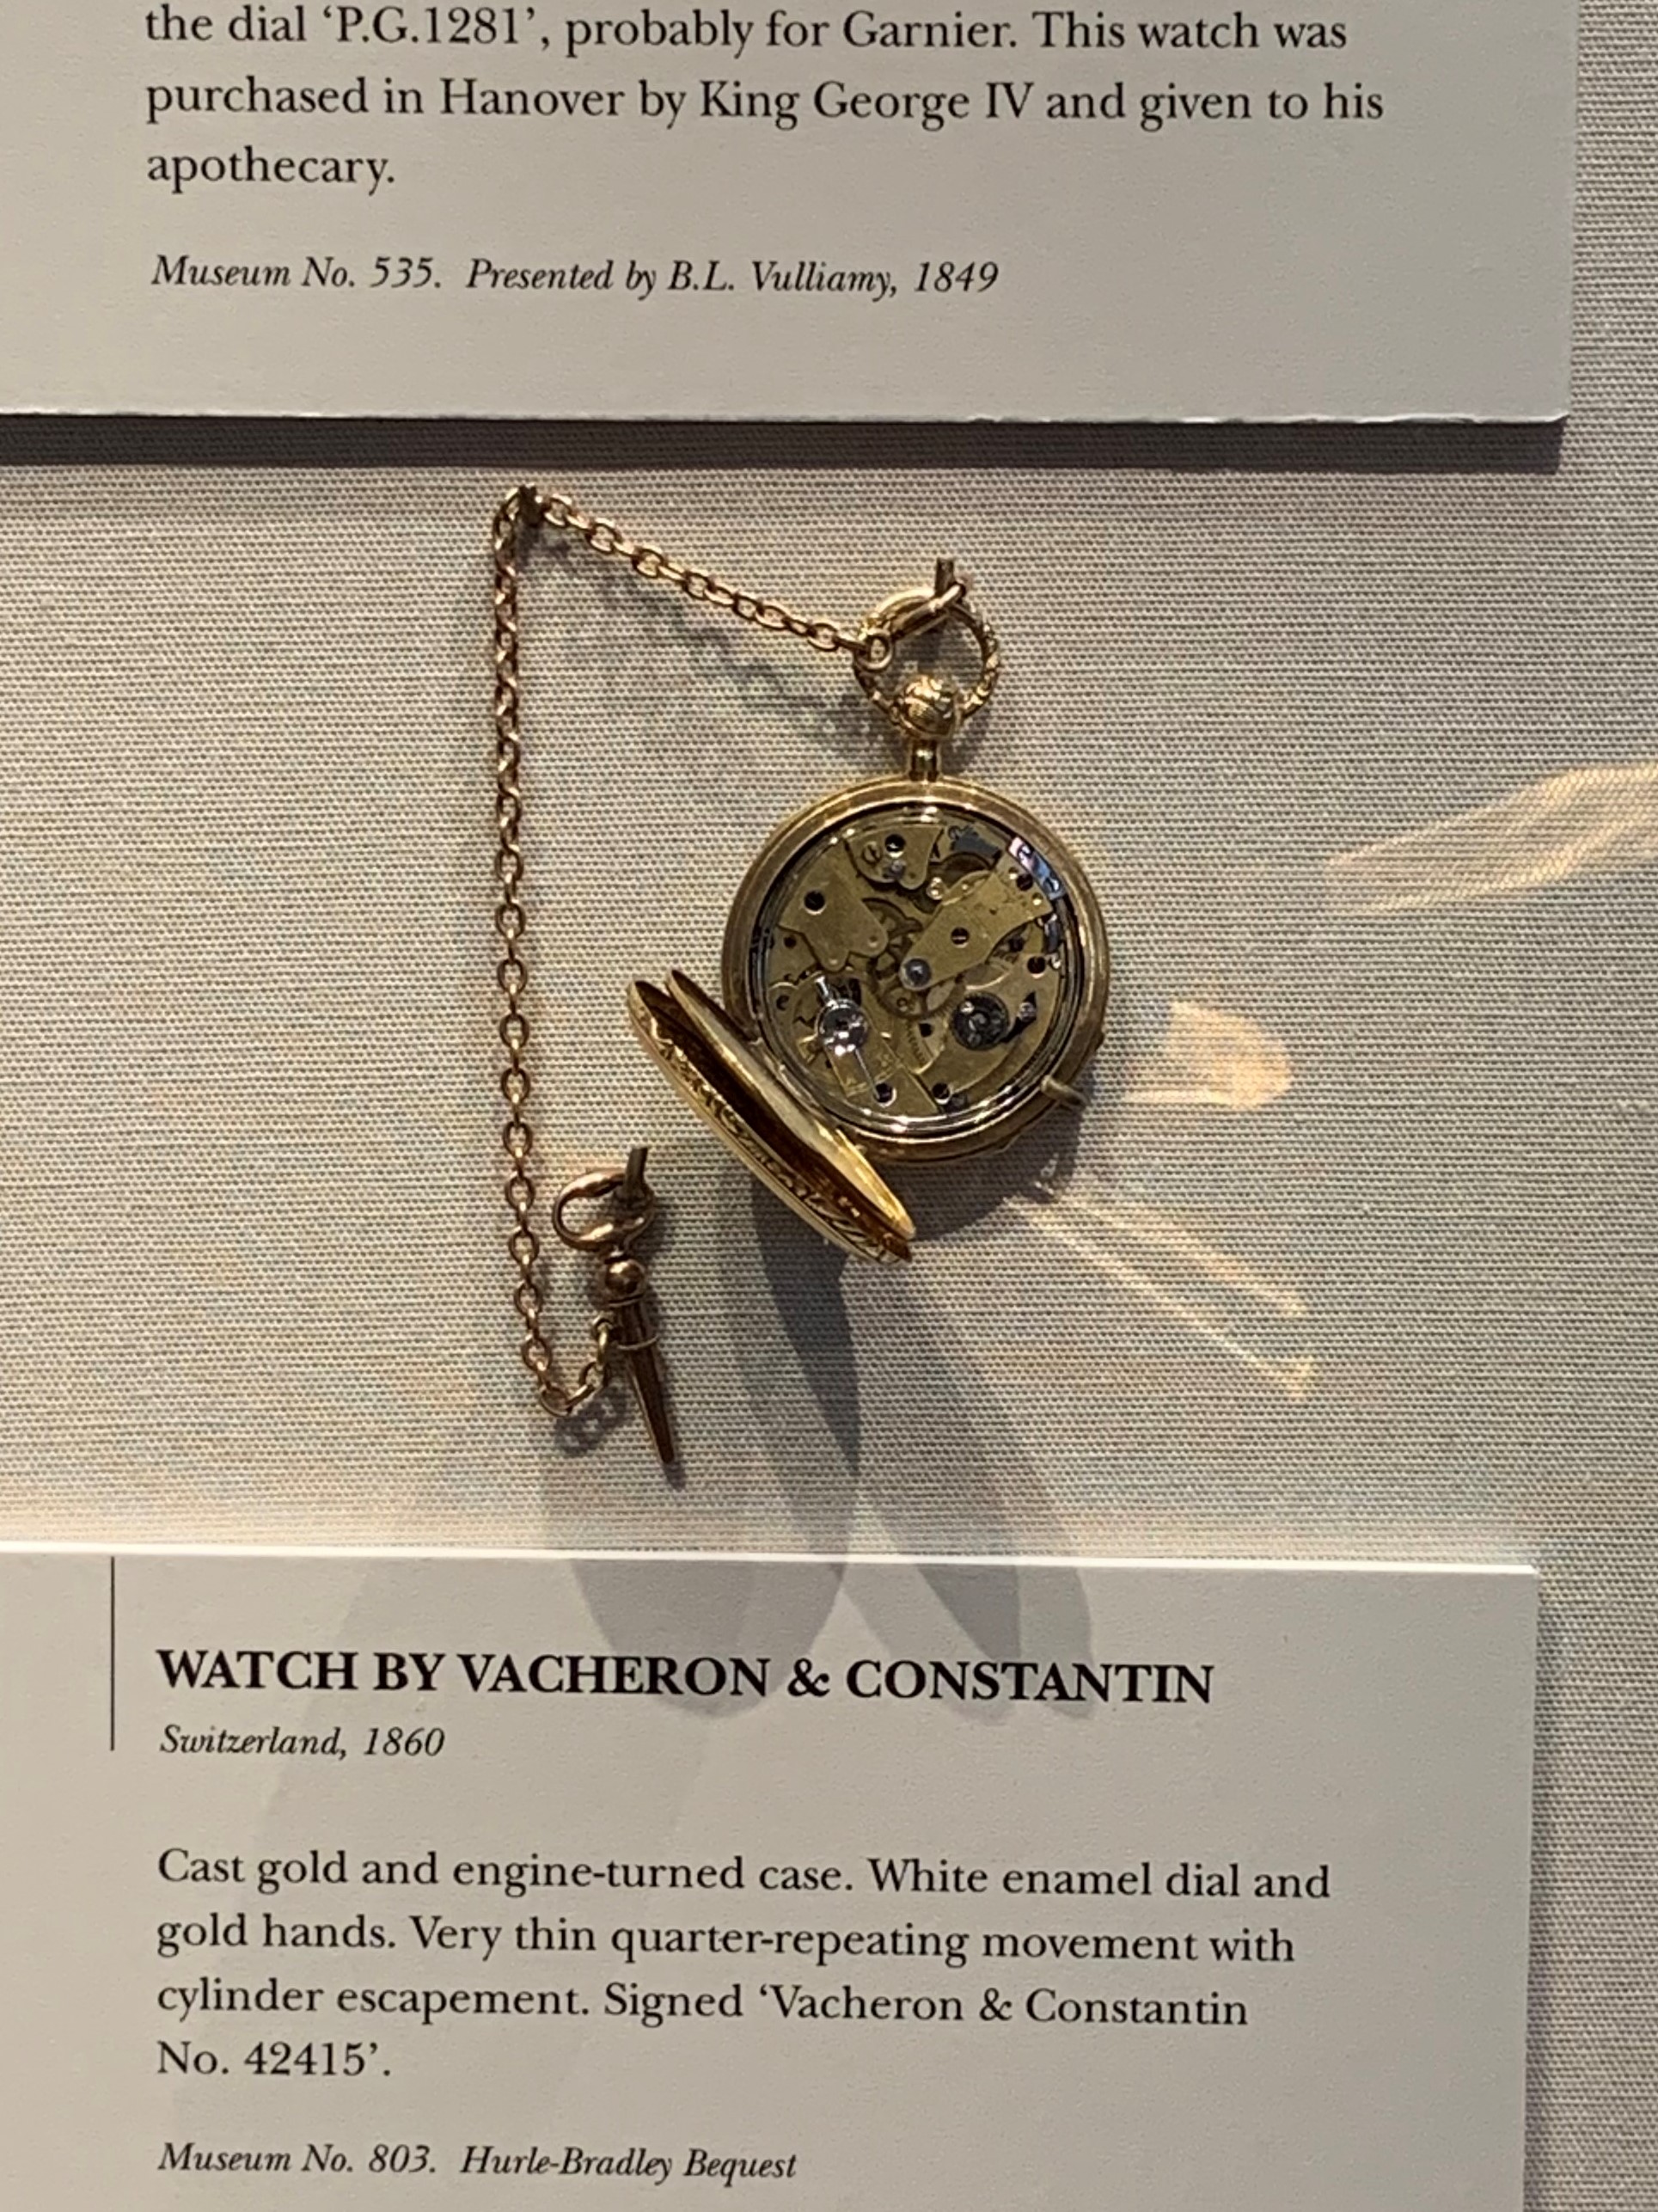 Vacheron & Constantin pocket watch